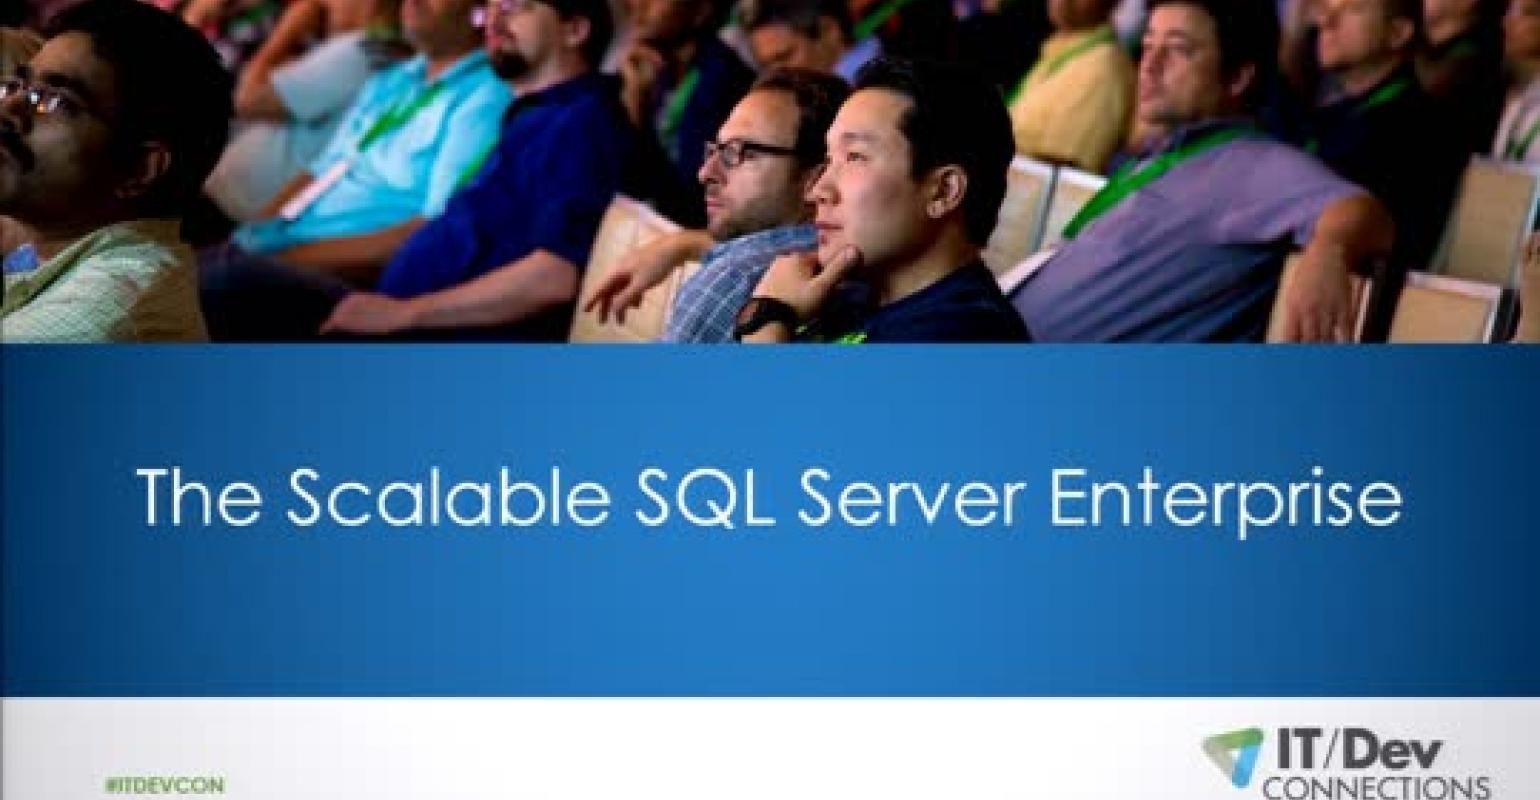 The Scalable SQL Server Enterprise